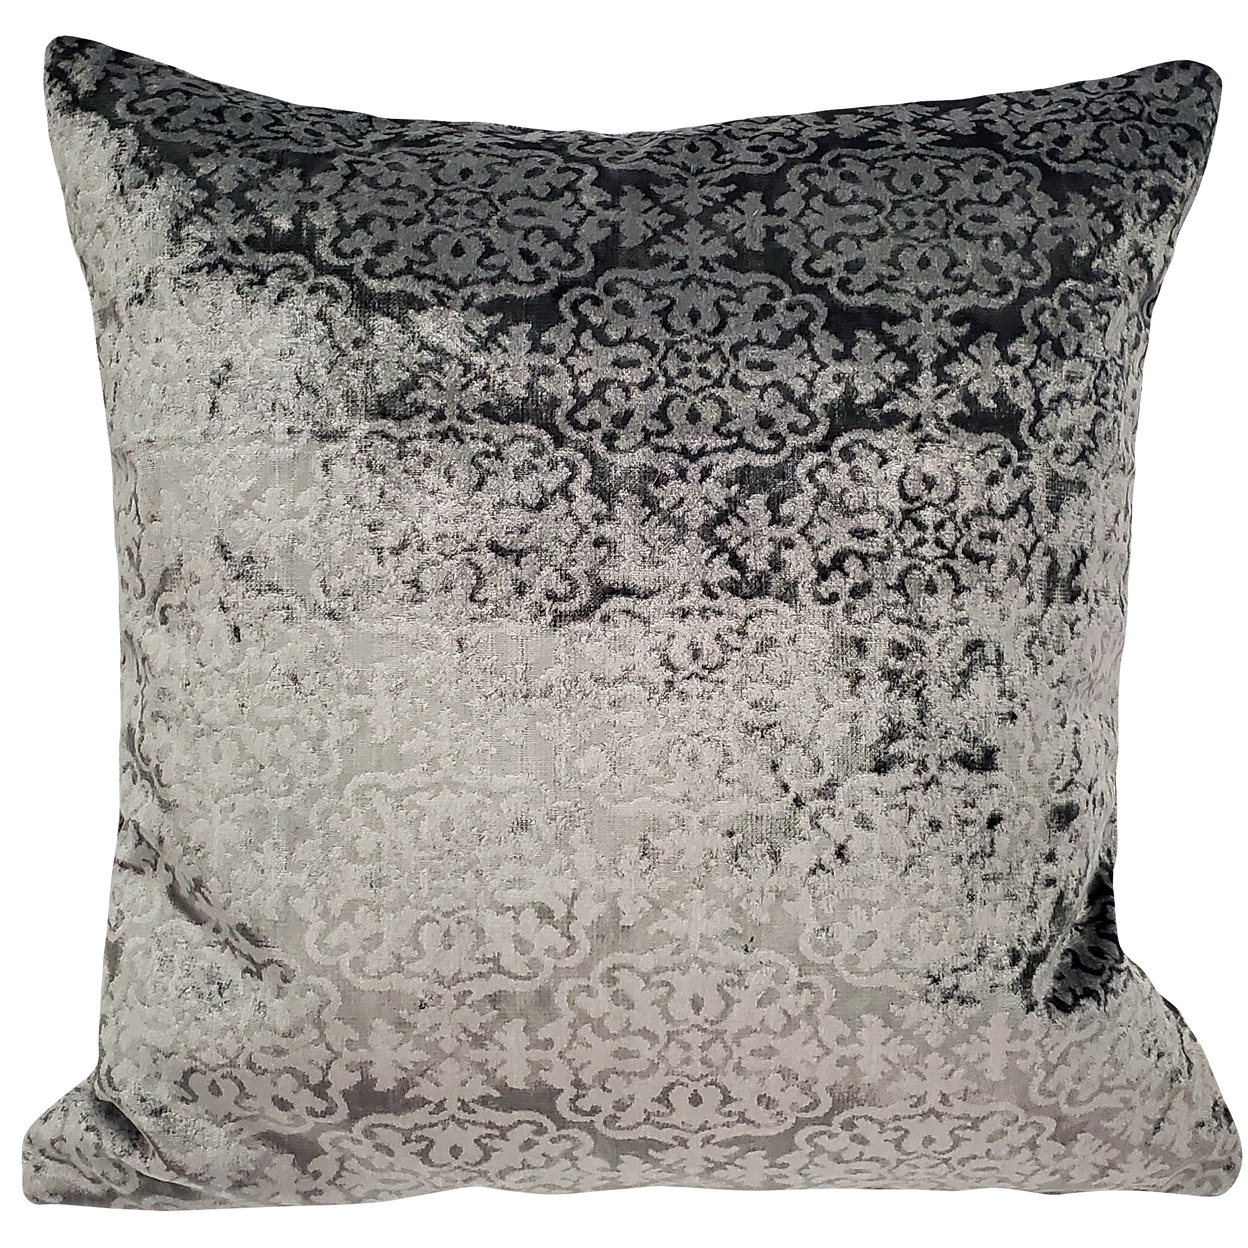 Artemis Pewter Gray Velvet Throw Pillow 20x20, With Polyfill Insert